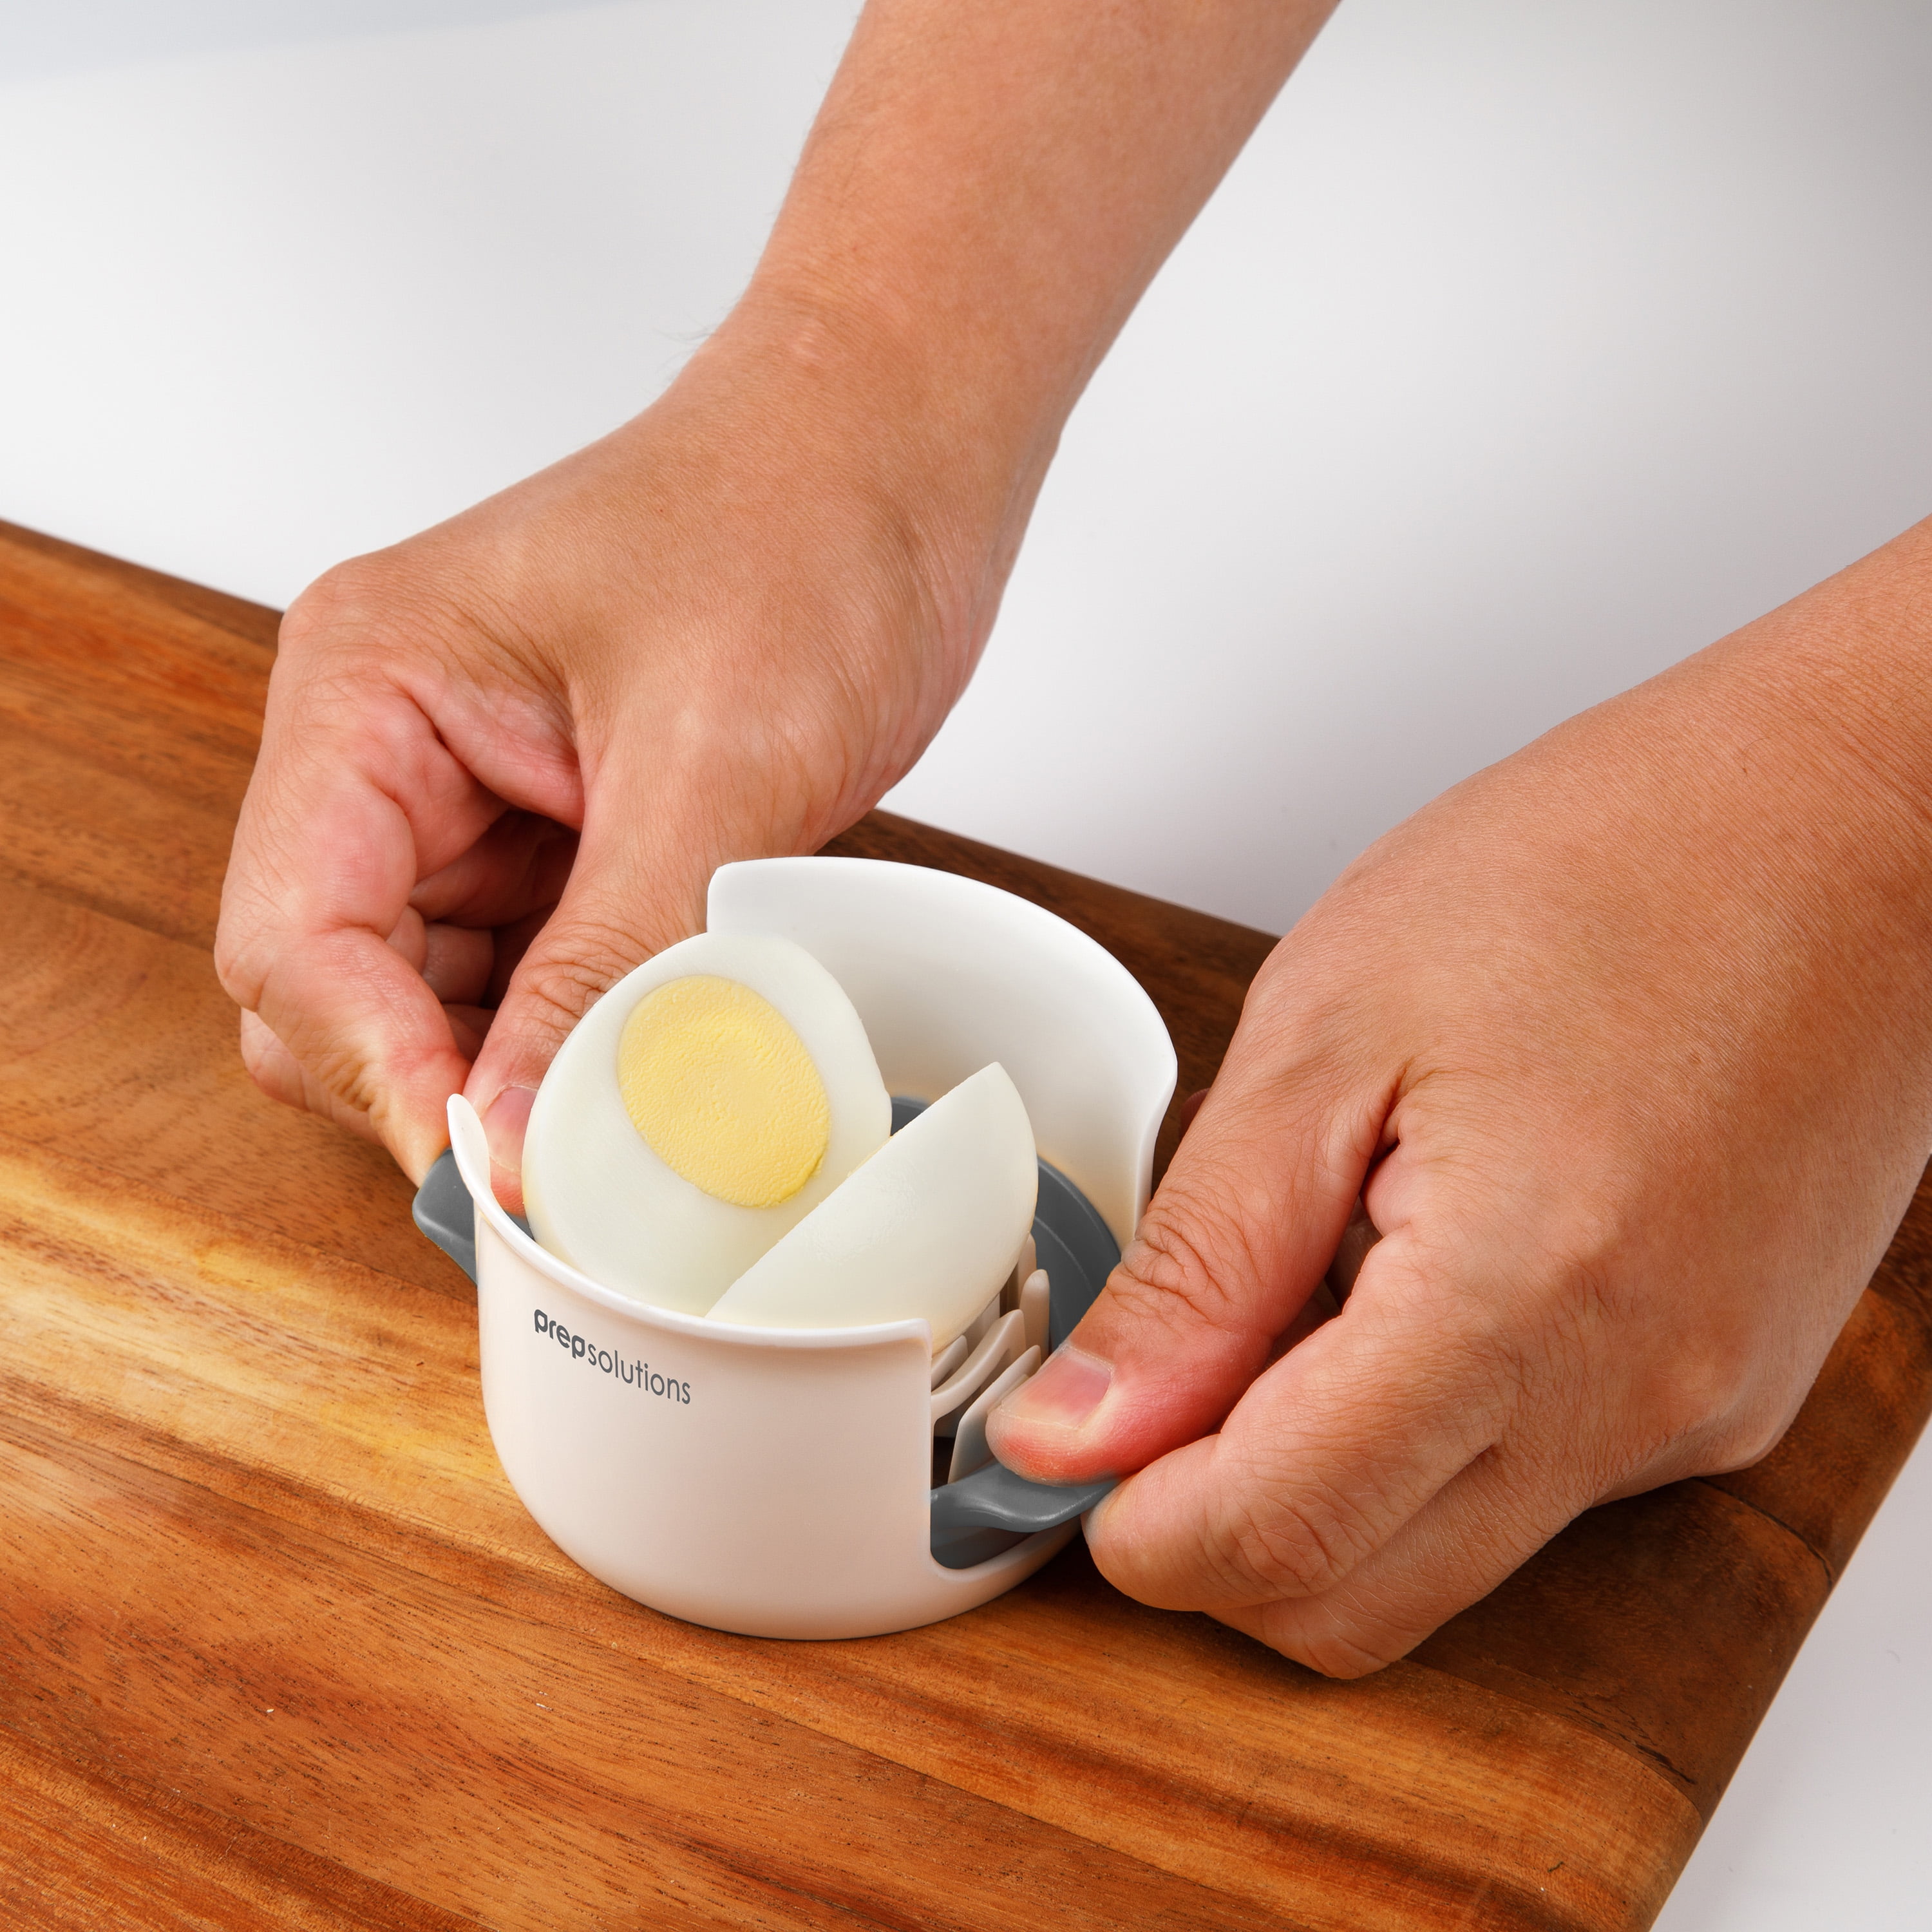 Prep Solutions 3-in-1 Egg Slicer